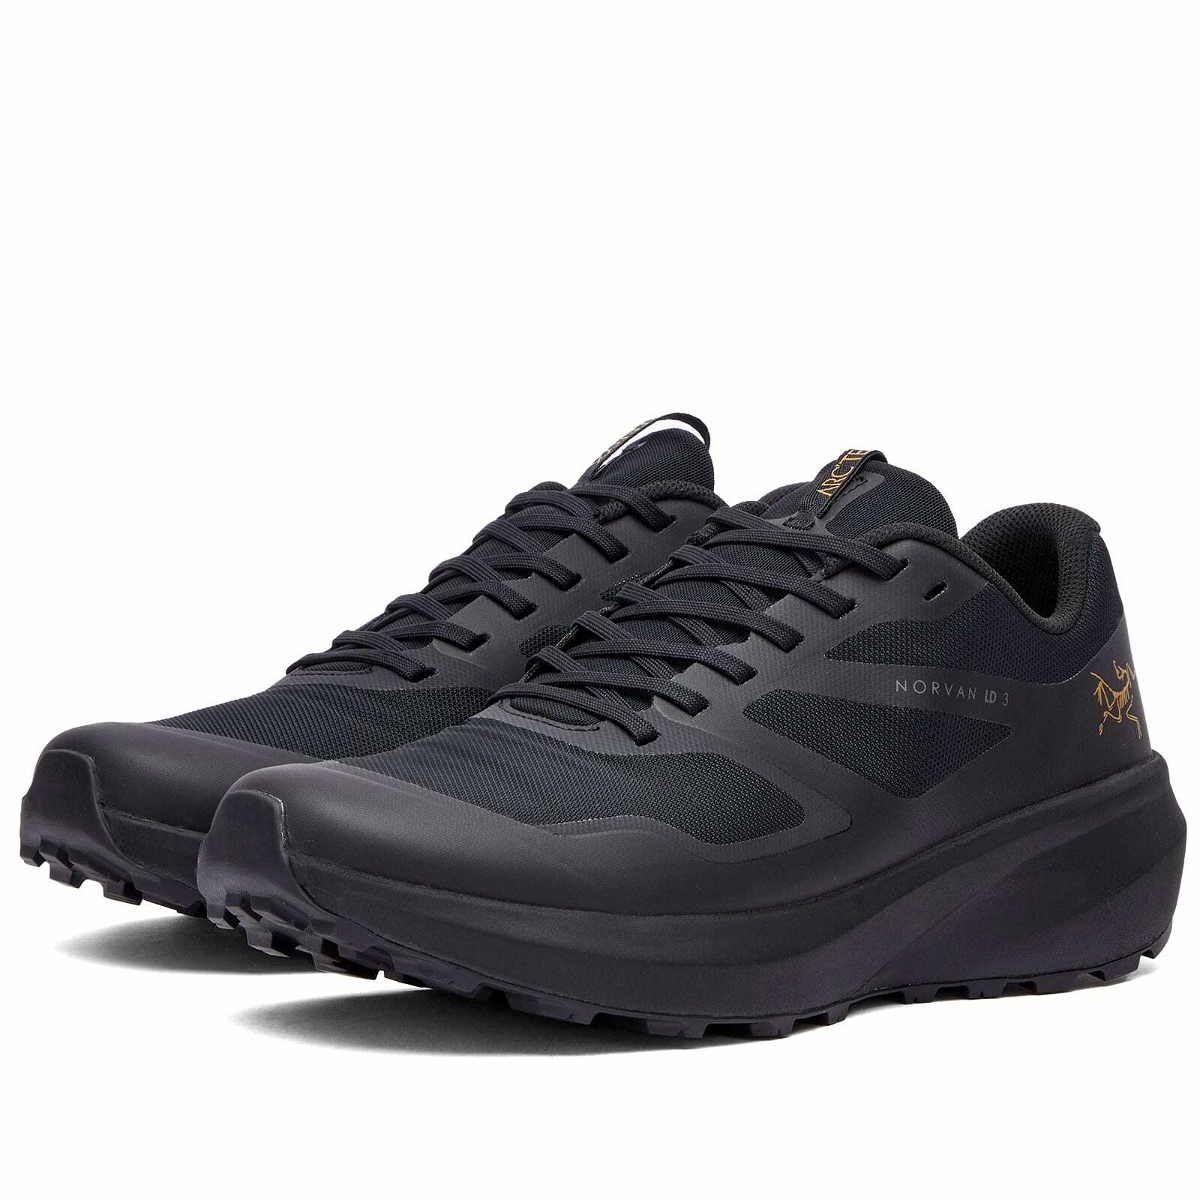 Arc'teryx - Norvan LD 2 GORE-TEX Trail Running Sneakers - Black 